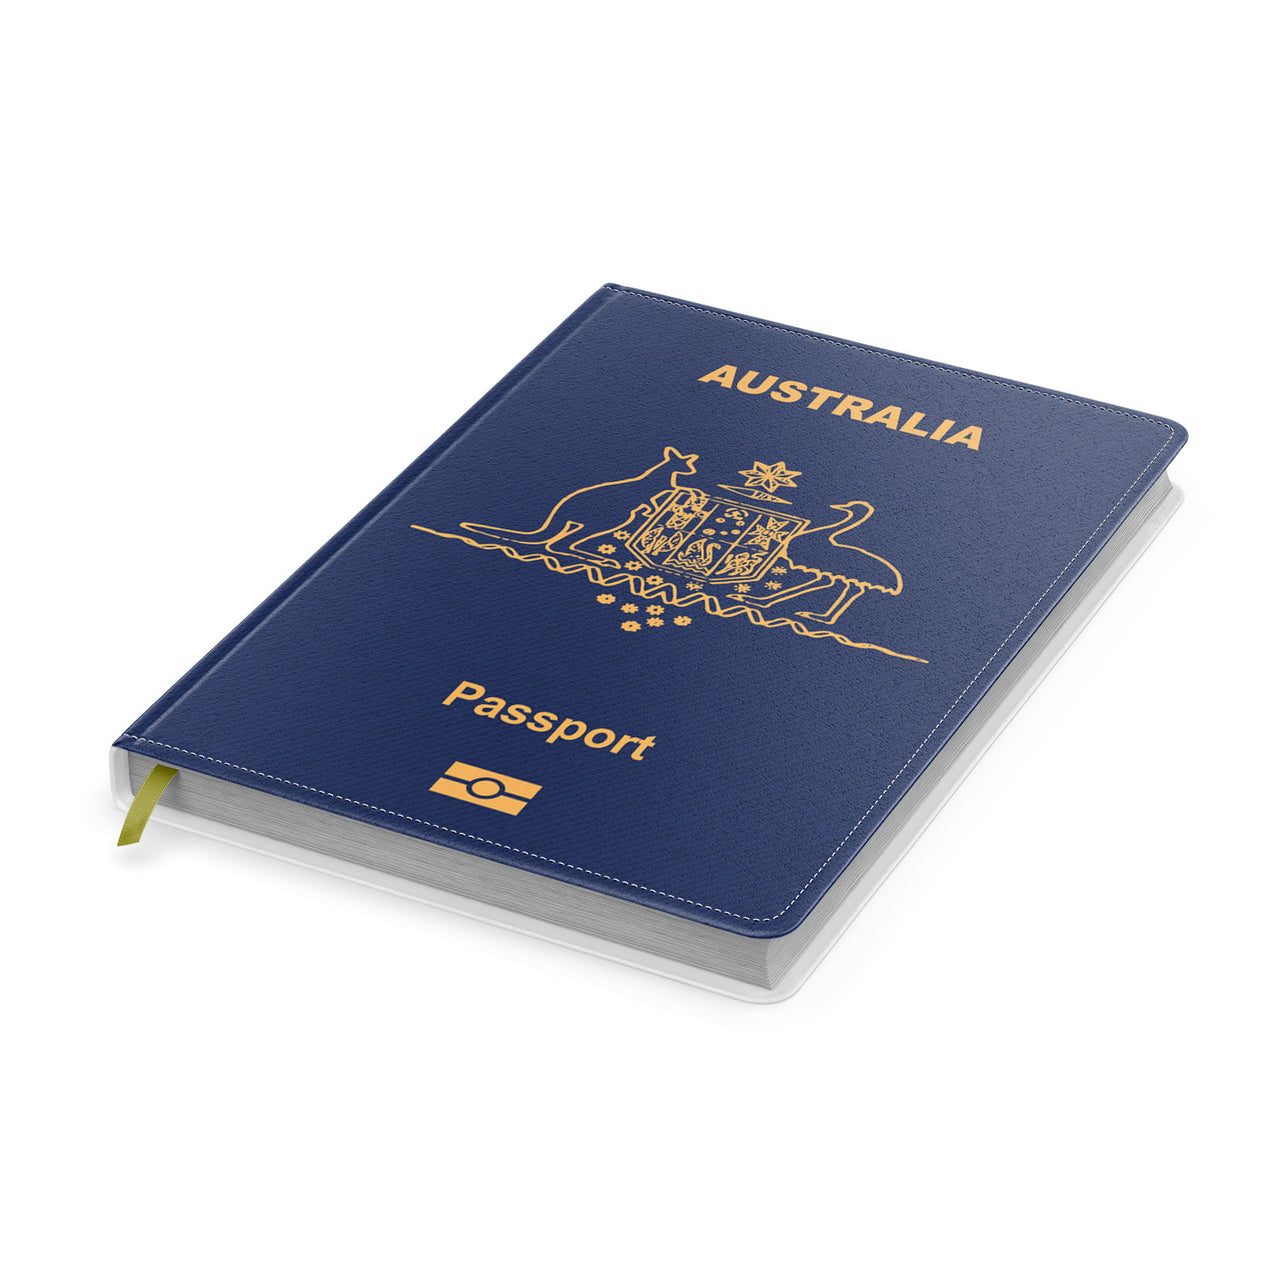 Australia Passport Designed Notebooks